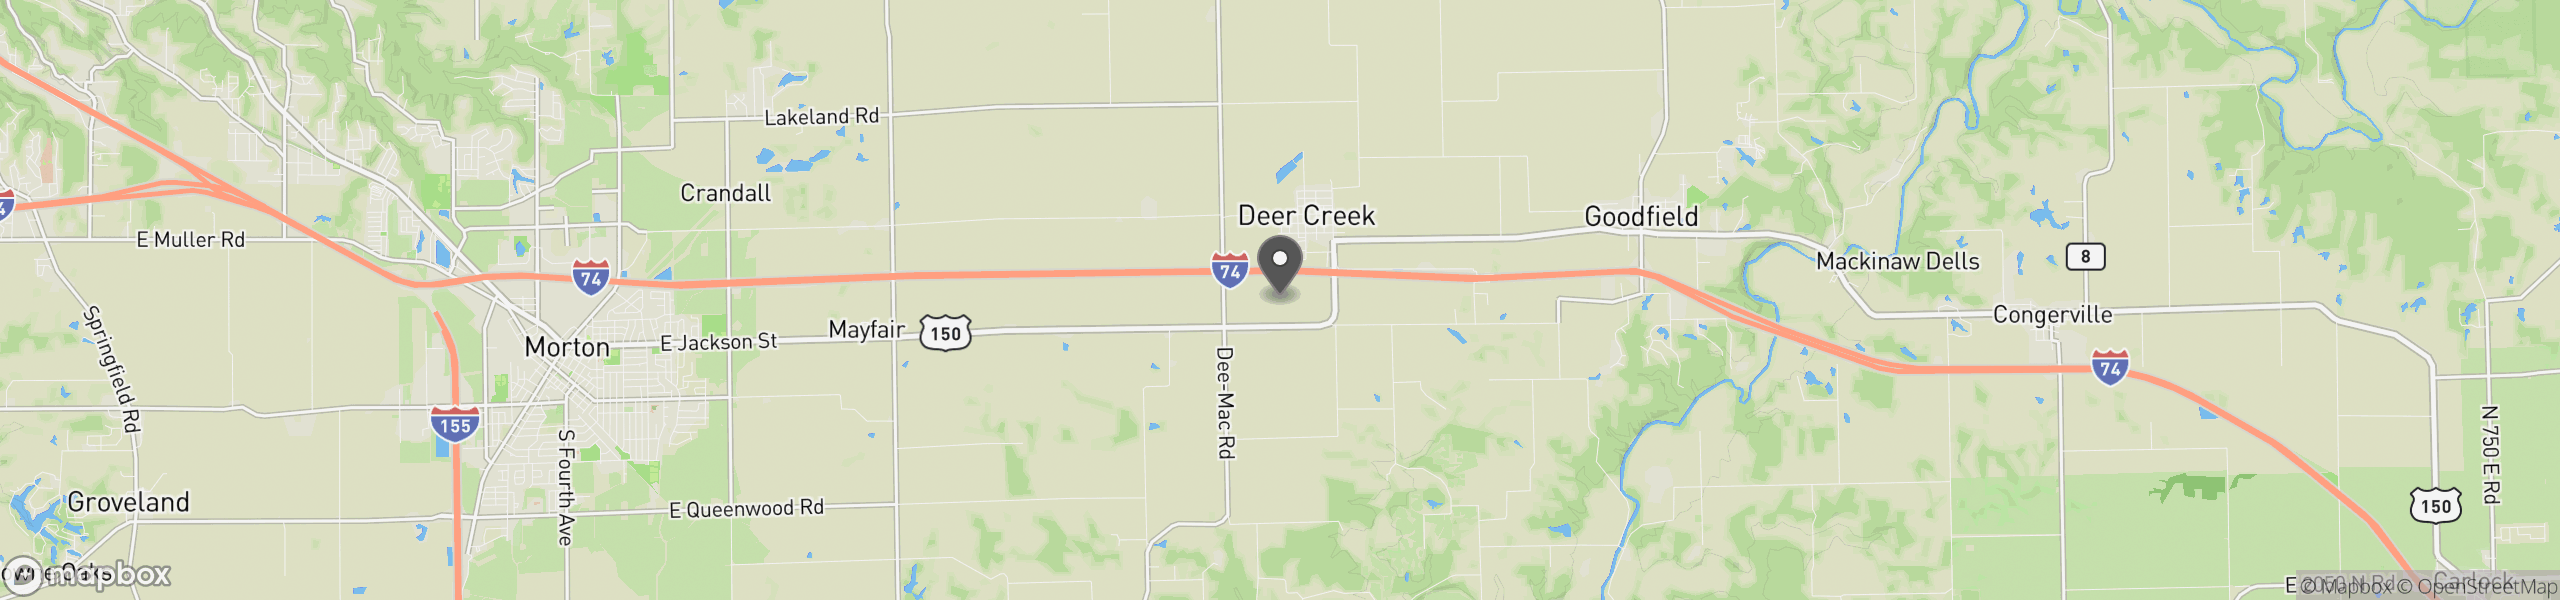 Deer Creek, IL